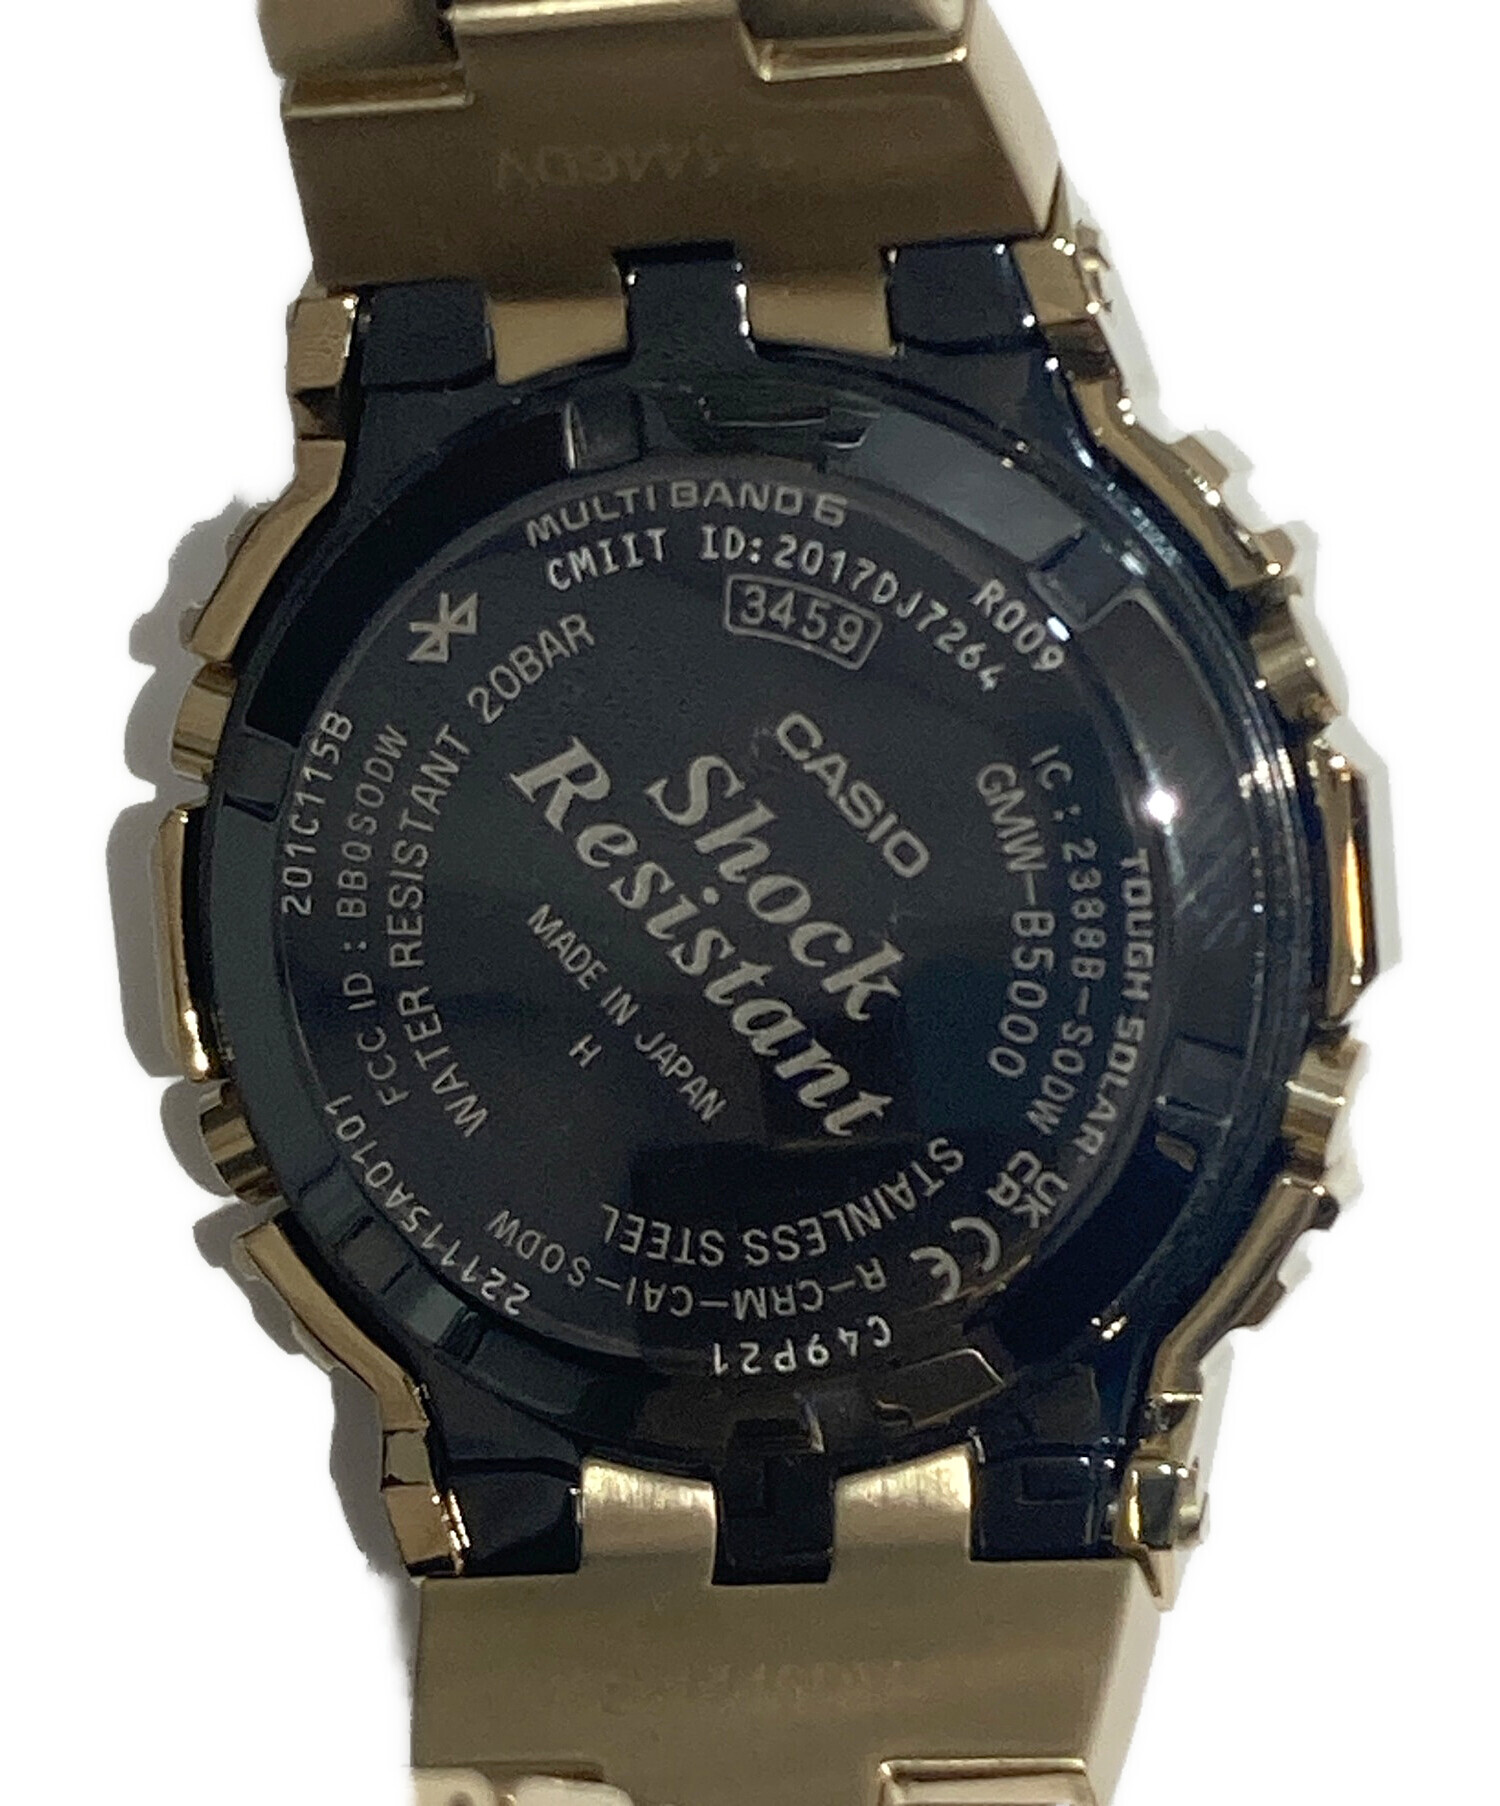 CASIO G-shock (カシオ ジーショック) GMW-B5000GD-9JF FULL METAL 5000 SERIES 腕時計